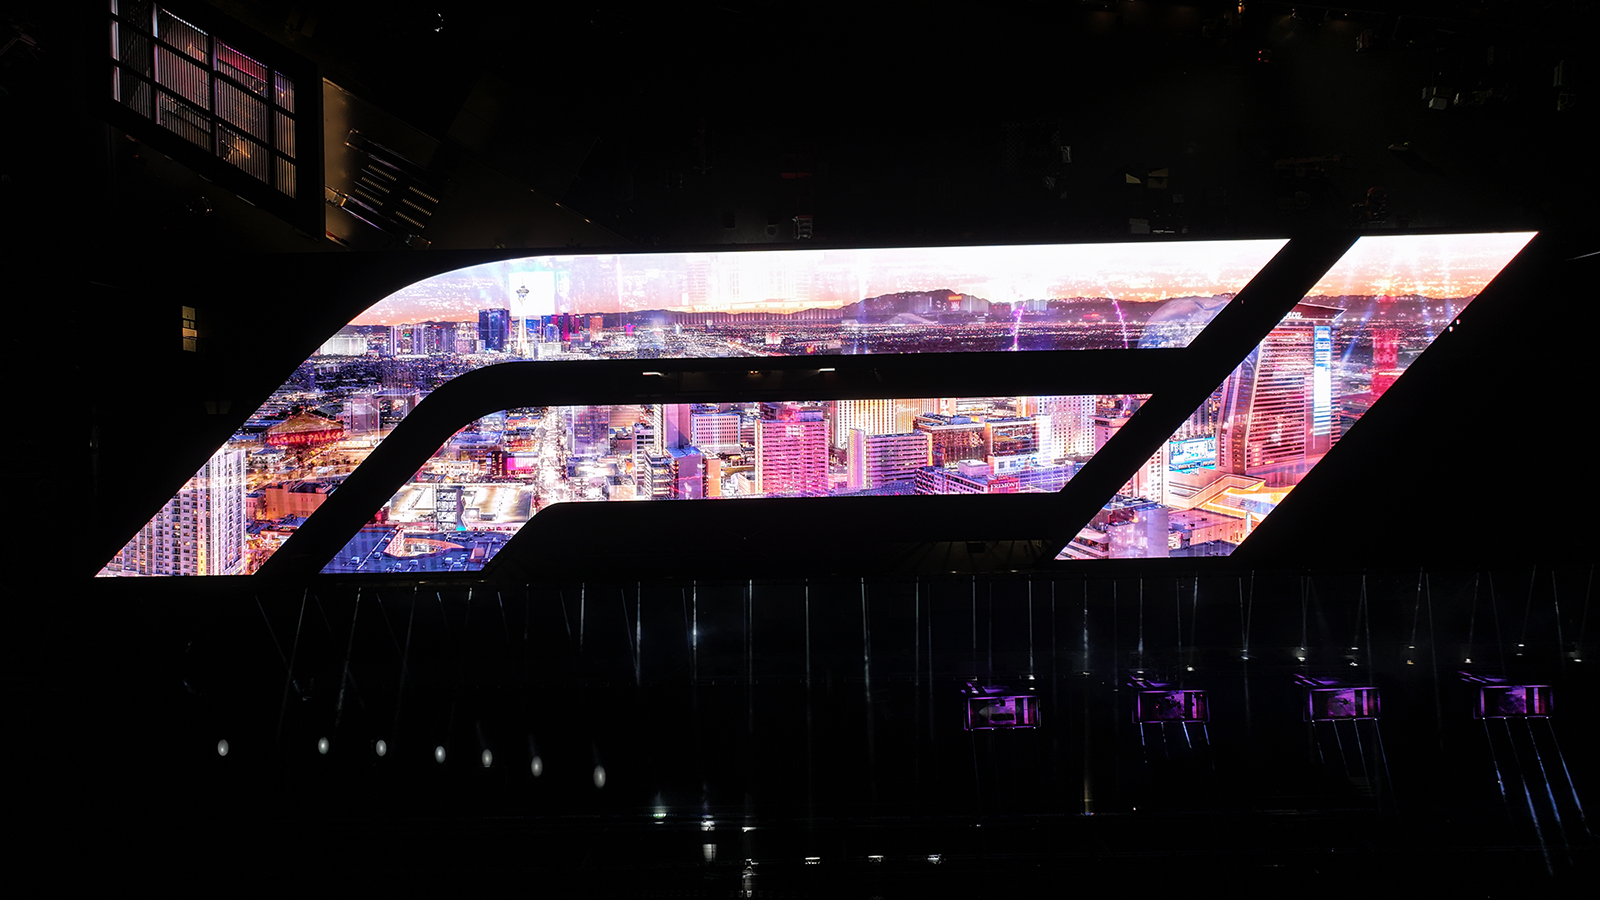 F1 Formula 1 logo with Las Vegas skyline displayed on Samsung LED display